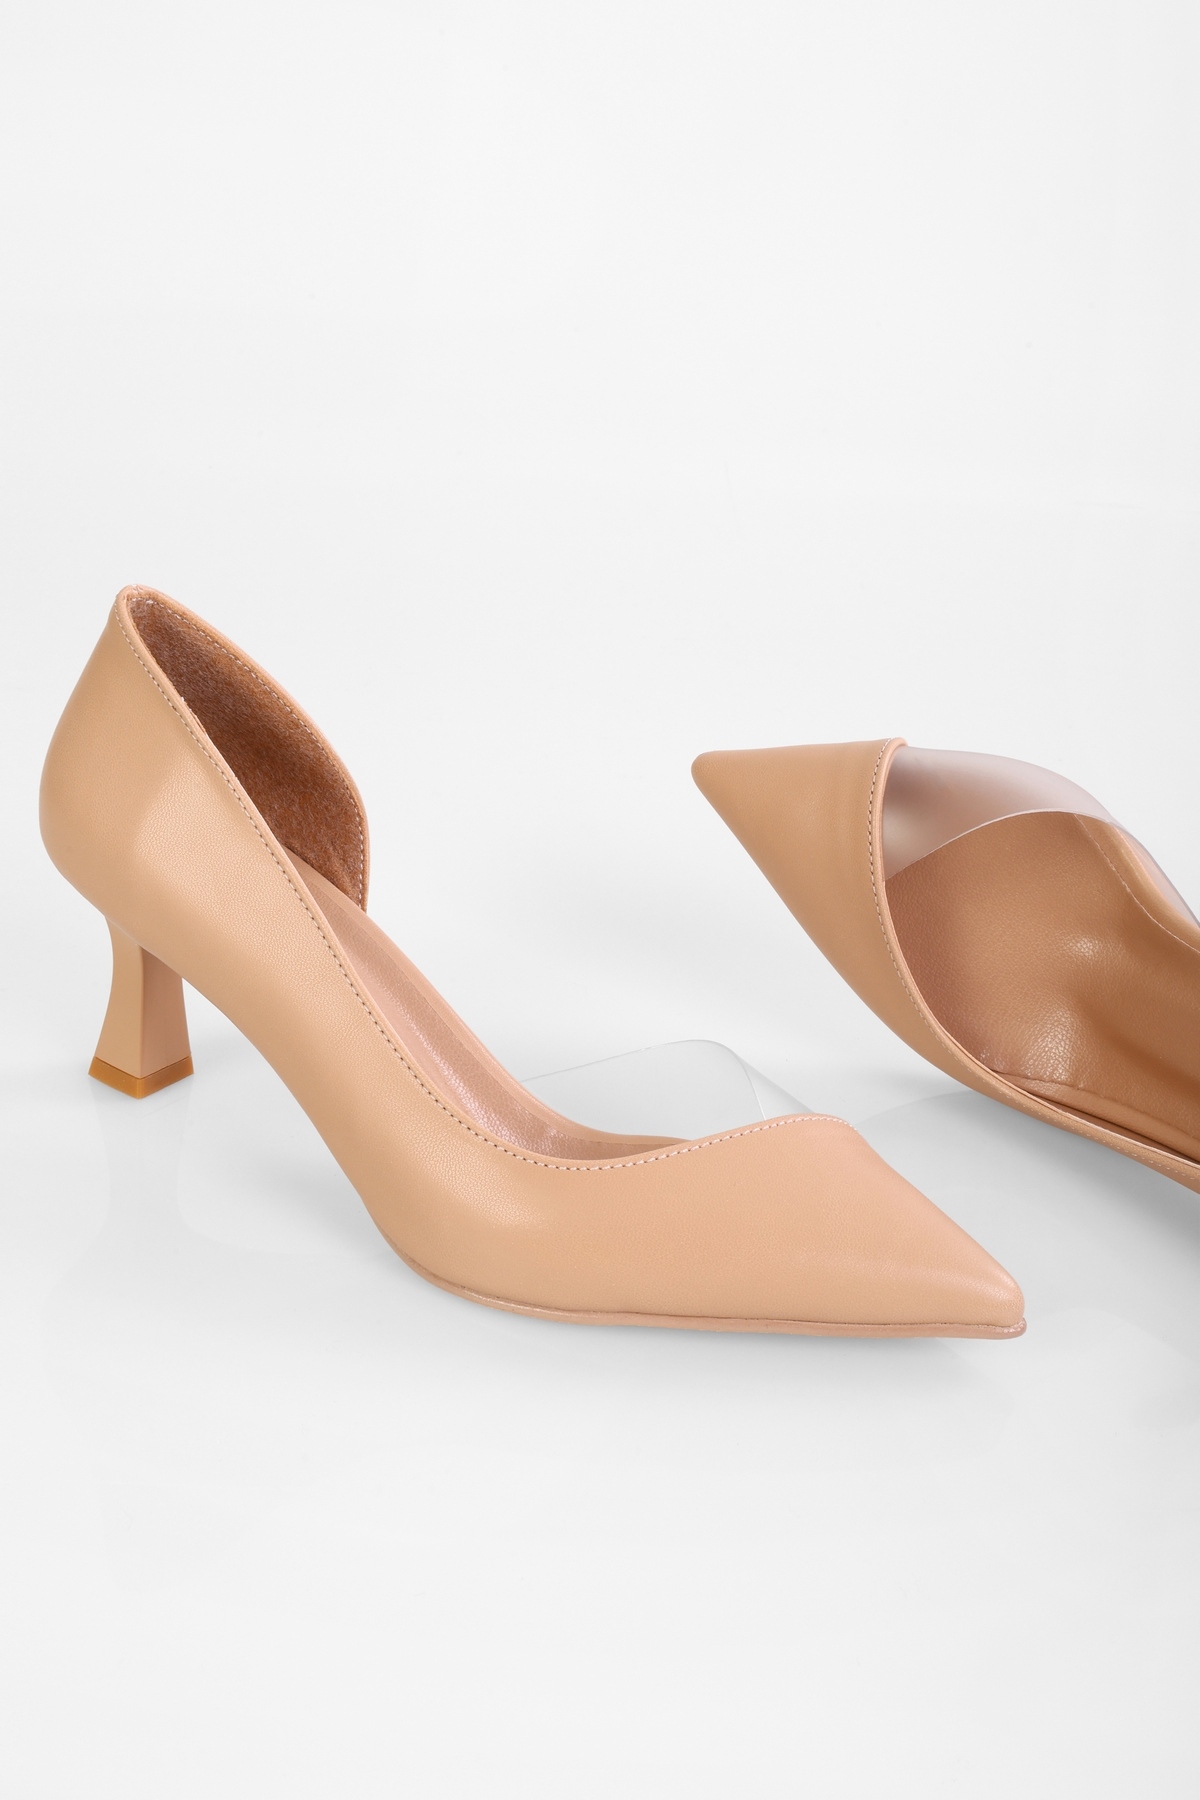 Levně Shoeberry Women's Millie Nude Skin Transparent Detailed Heeled Shoes Stiletto